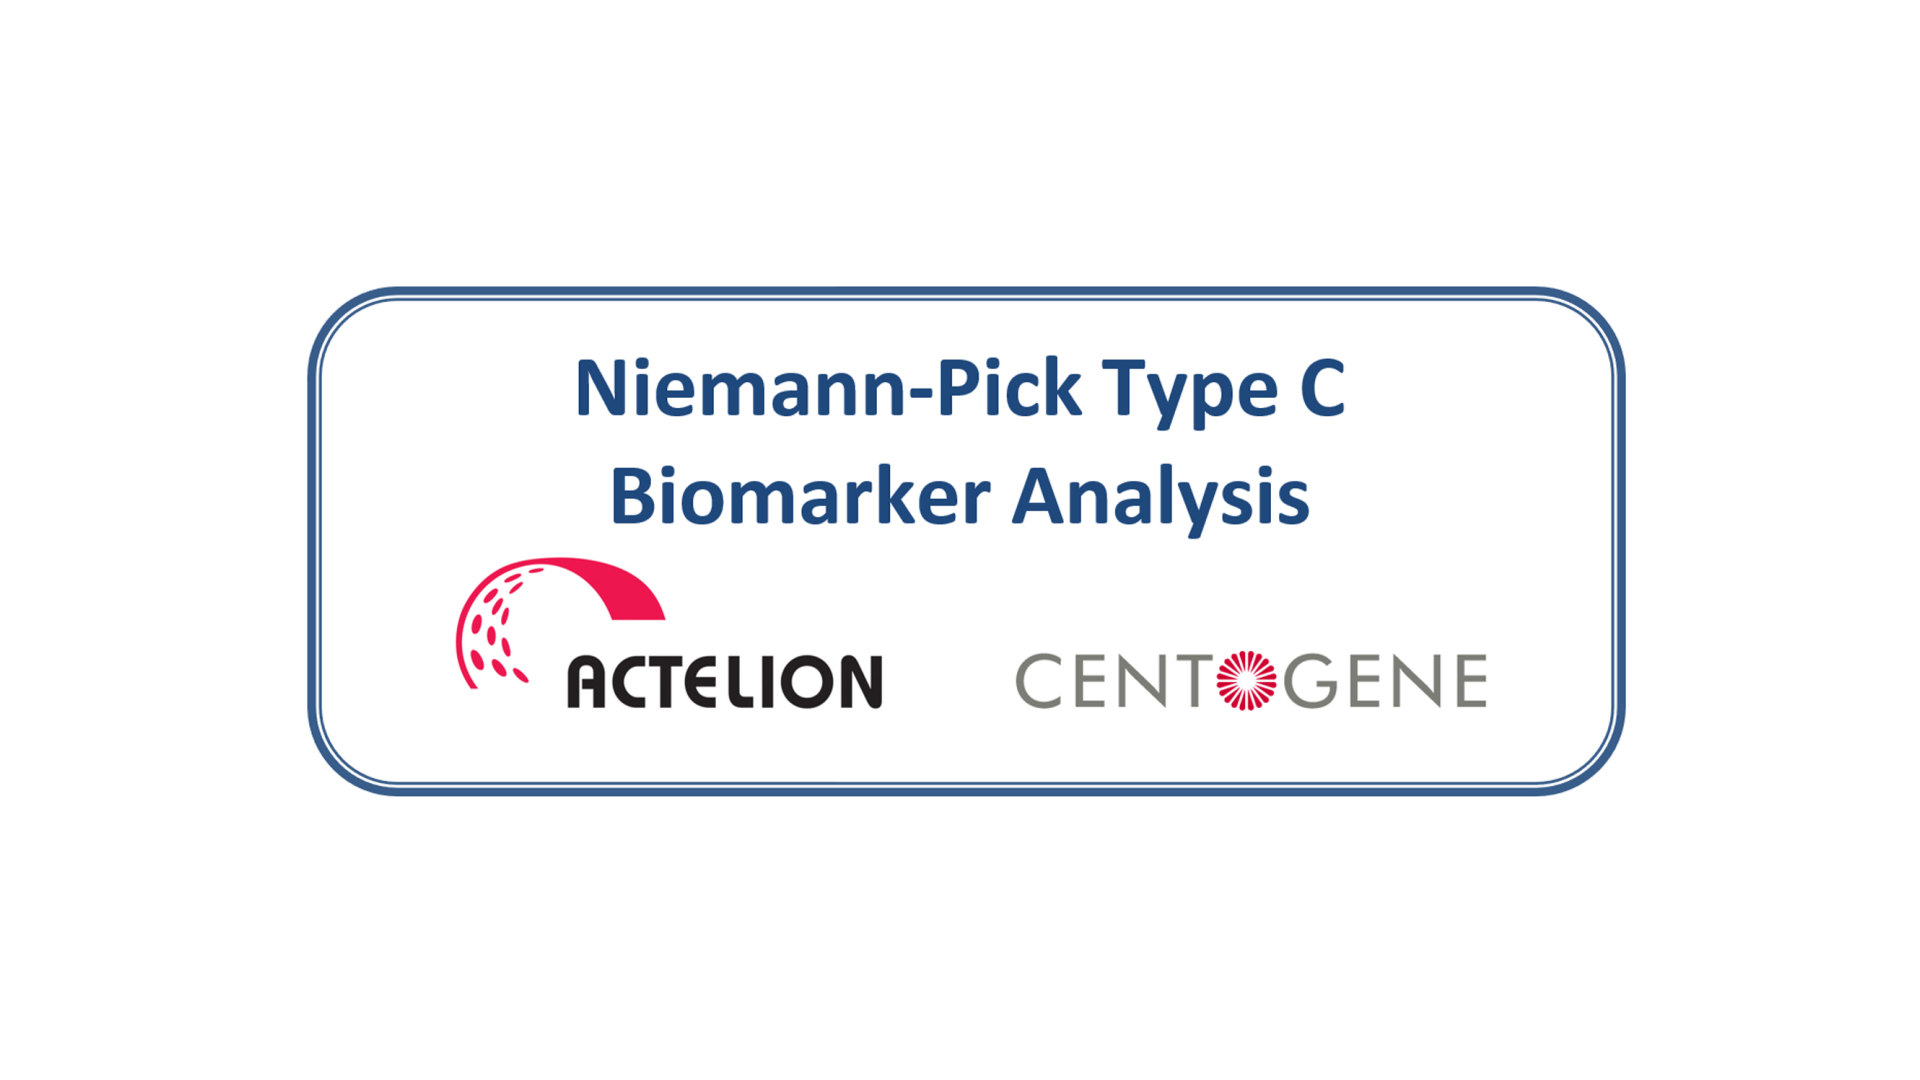 NP-C biomarker project